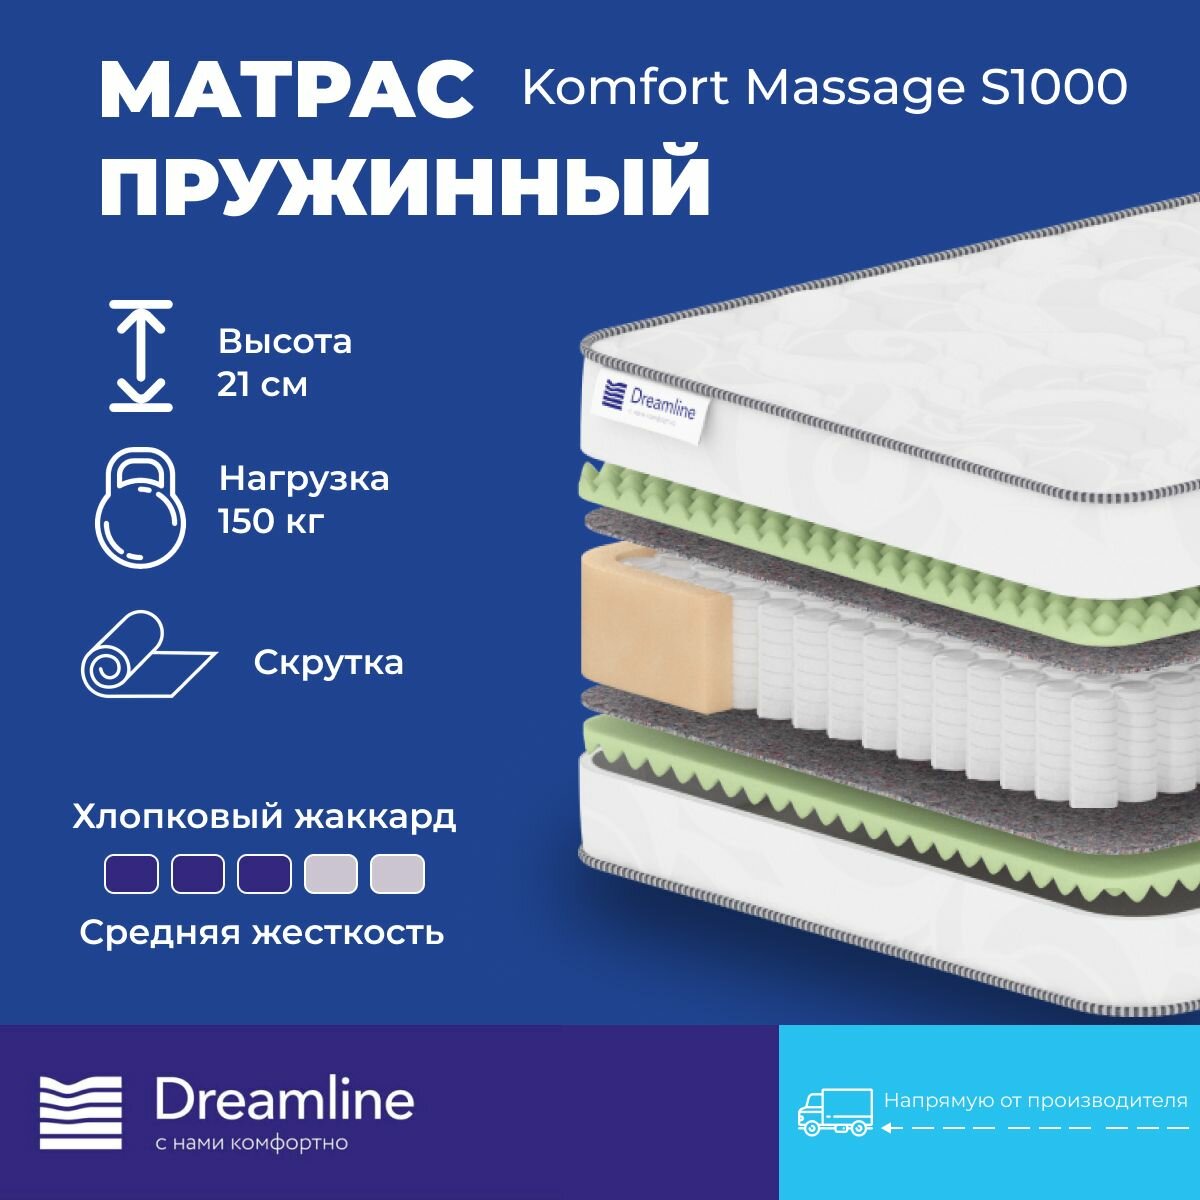  Dreamline Komfort Massage S1000   40x40 